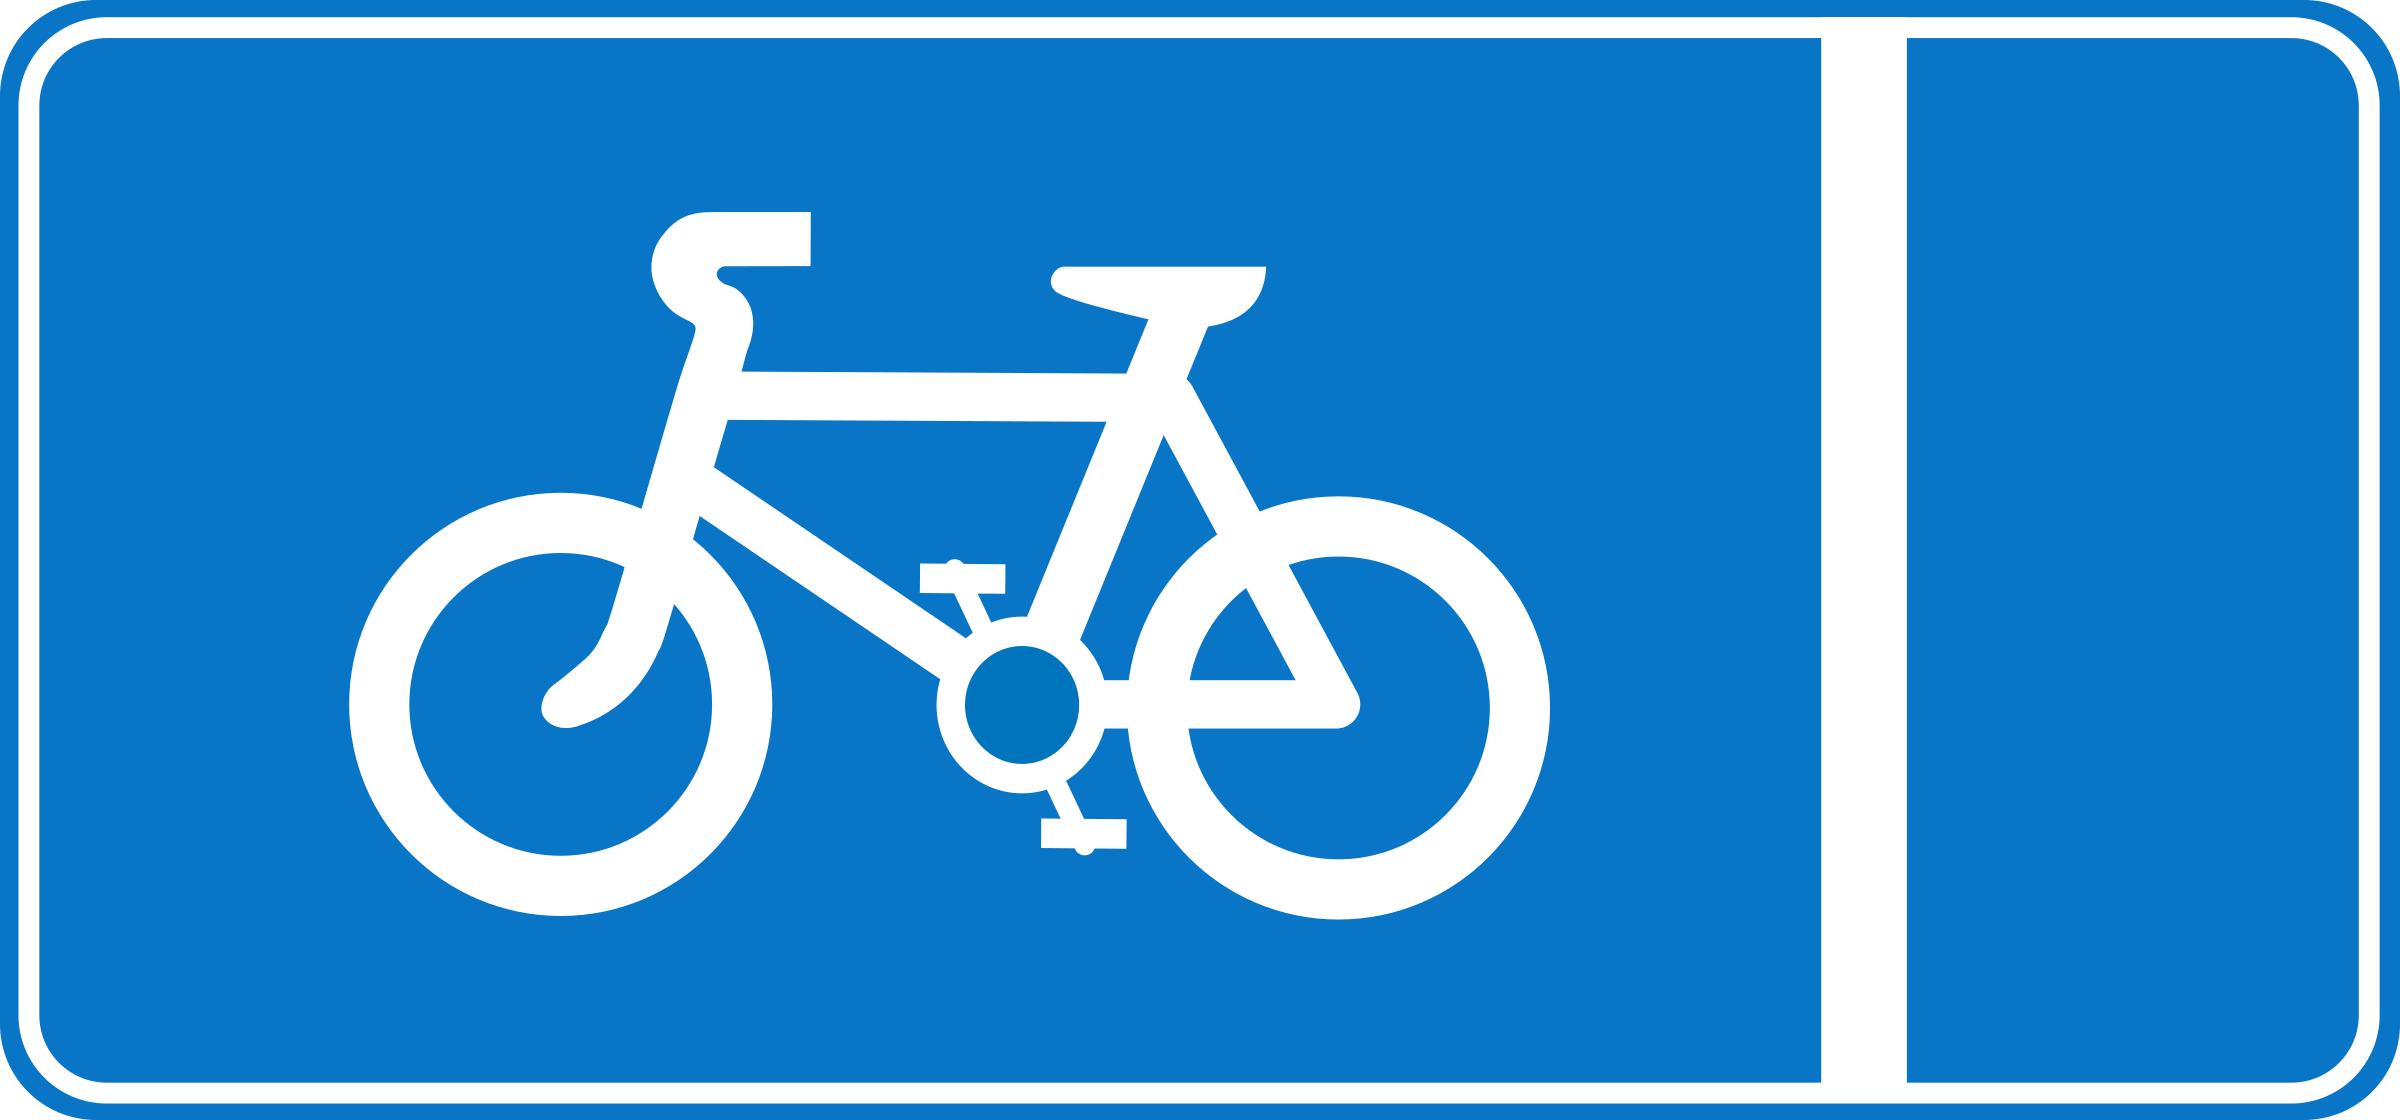 Roadsign Cycle lane png